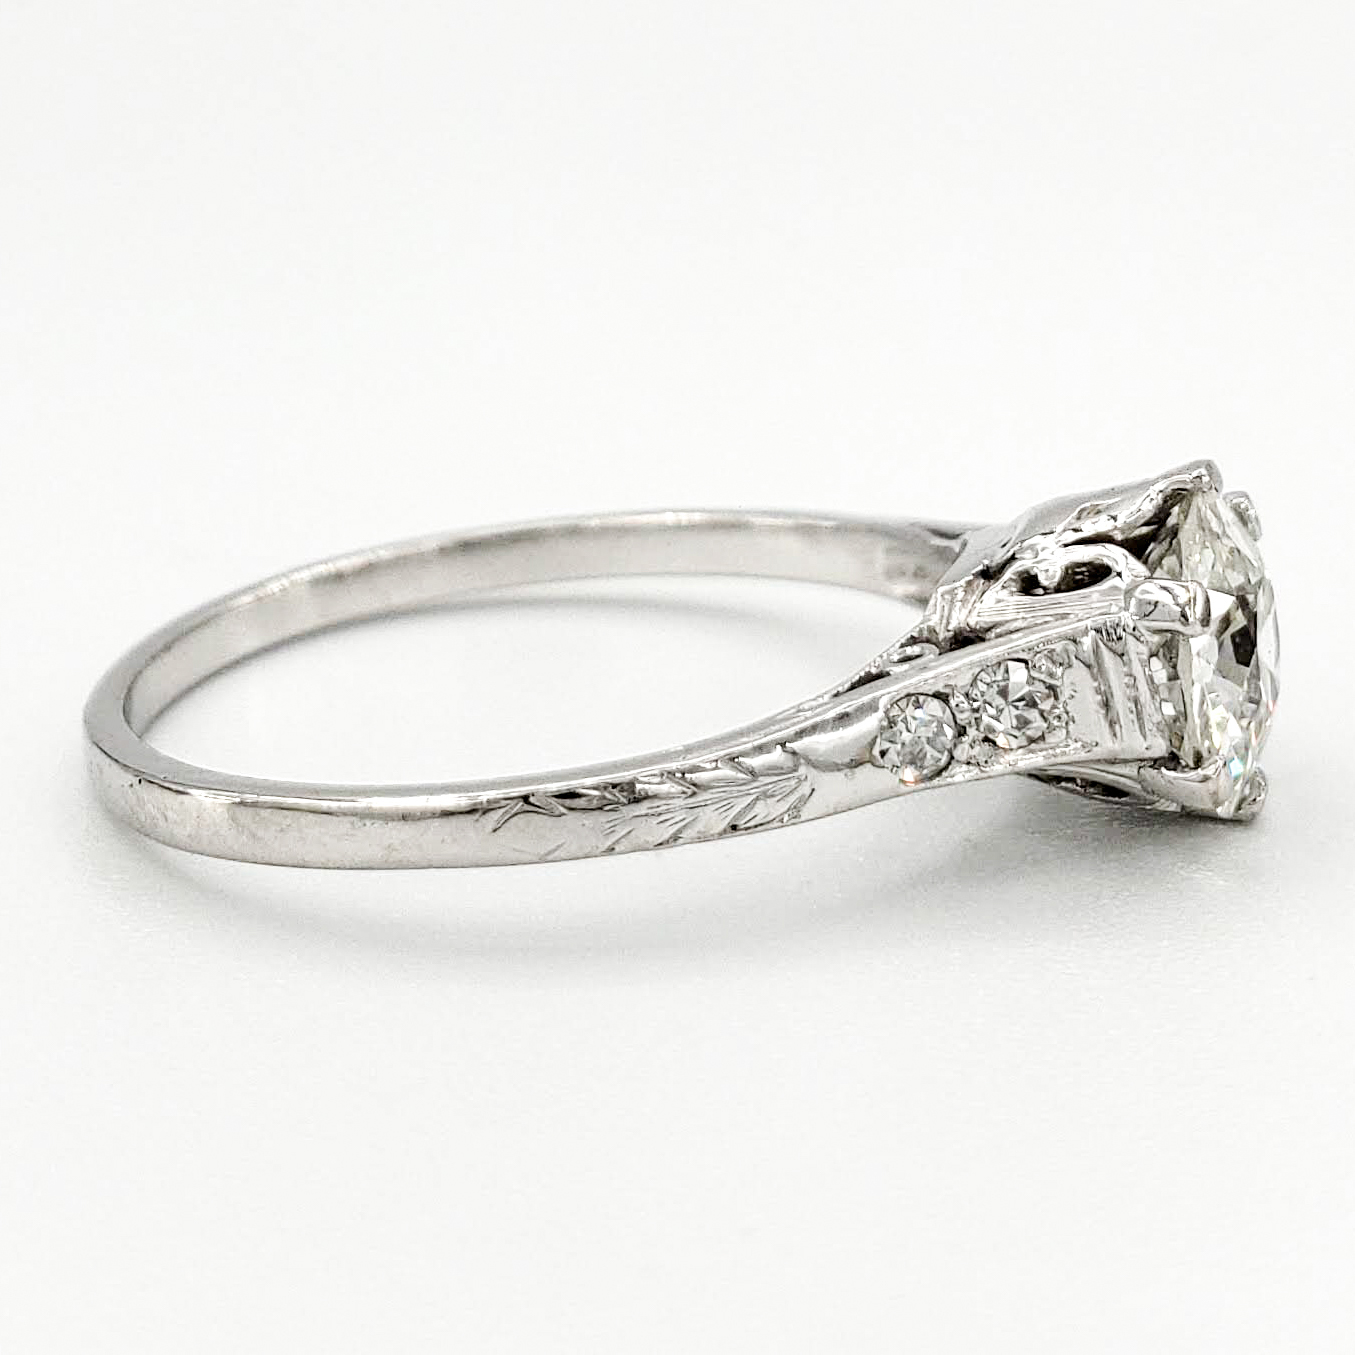 Vintage Platinum Engagement Ring With 0.76 Carat Old European Cut Diamond EGL – H VS2